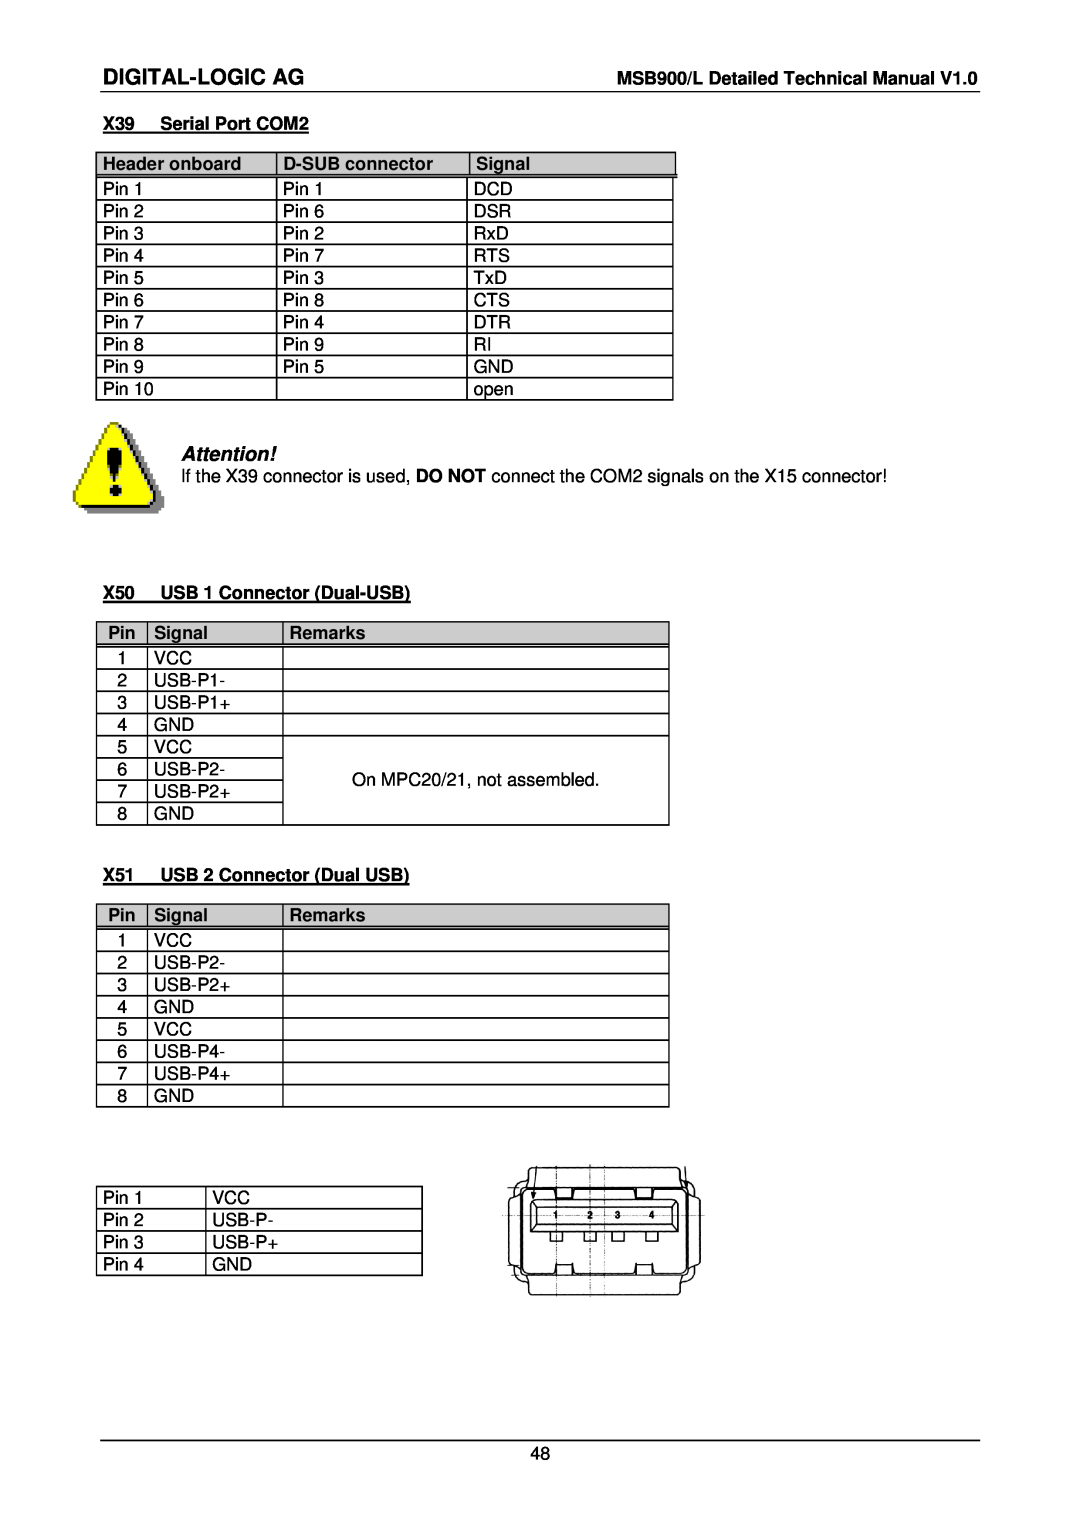 Compaq MSB900L user manual Digital-Logic Ag 